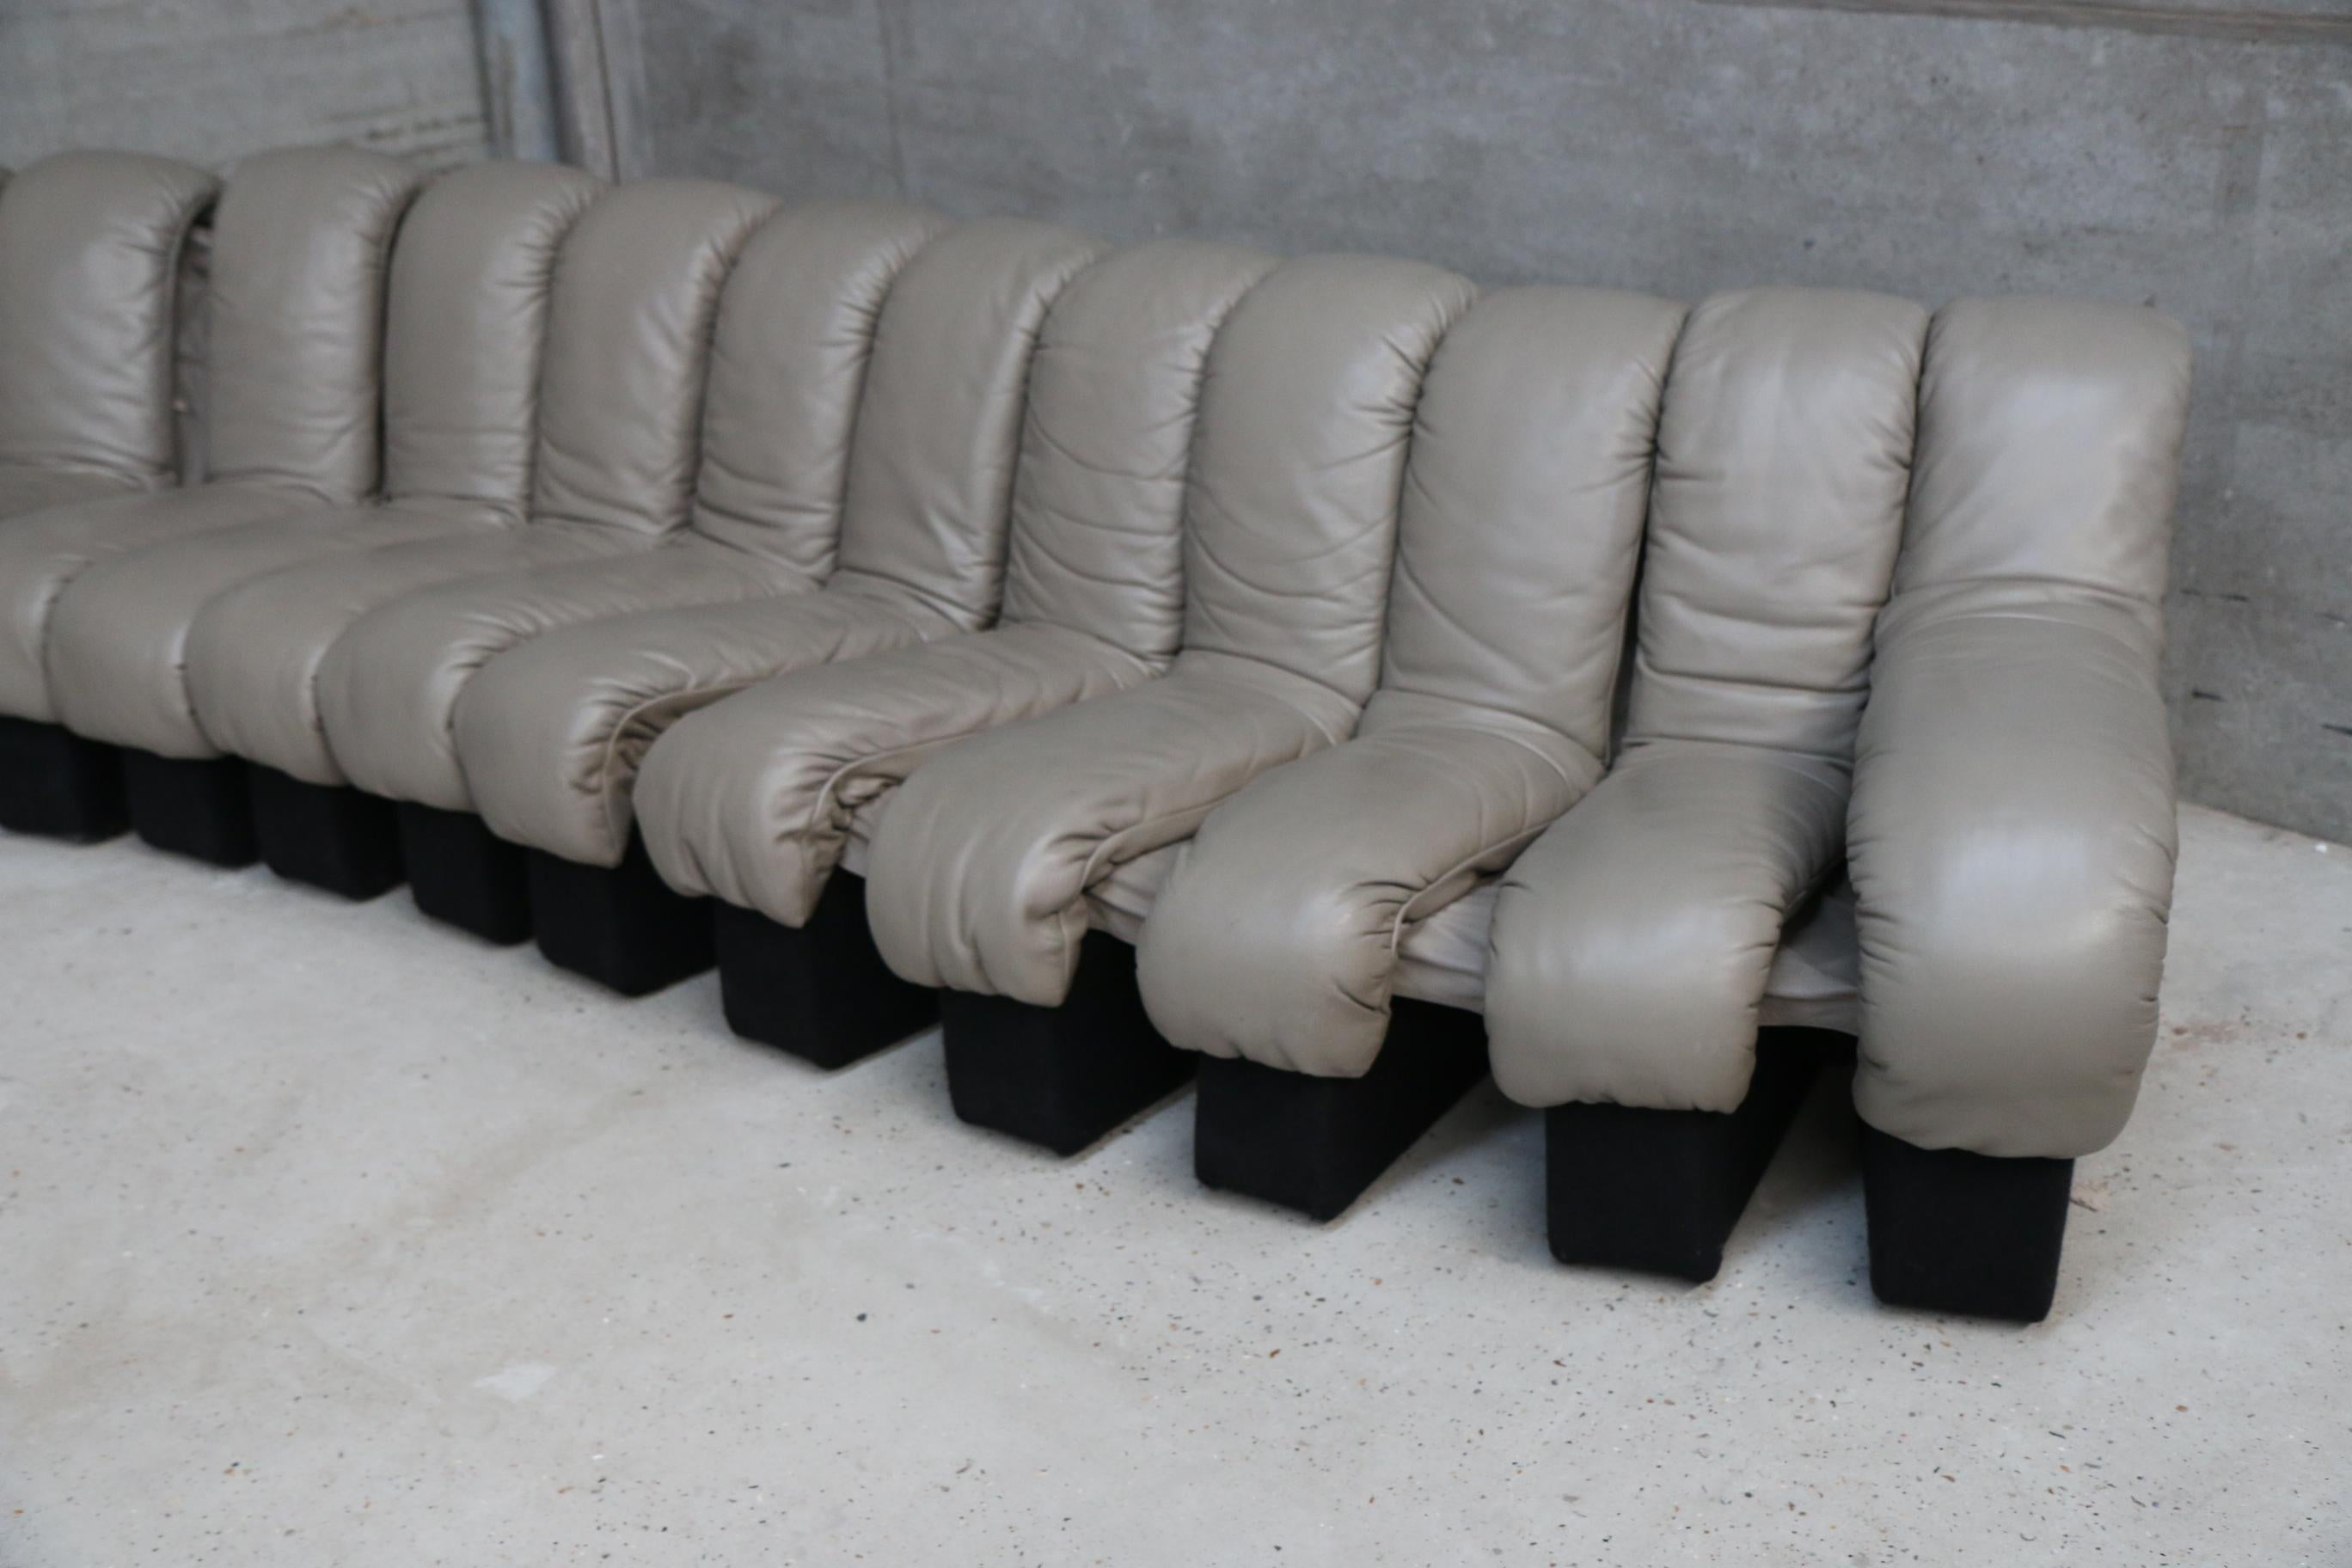 DS 600 De Sede ''Non stop'' or ''Snake sofa'', famous Cult design all original 6